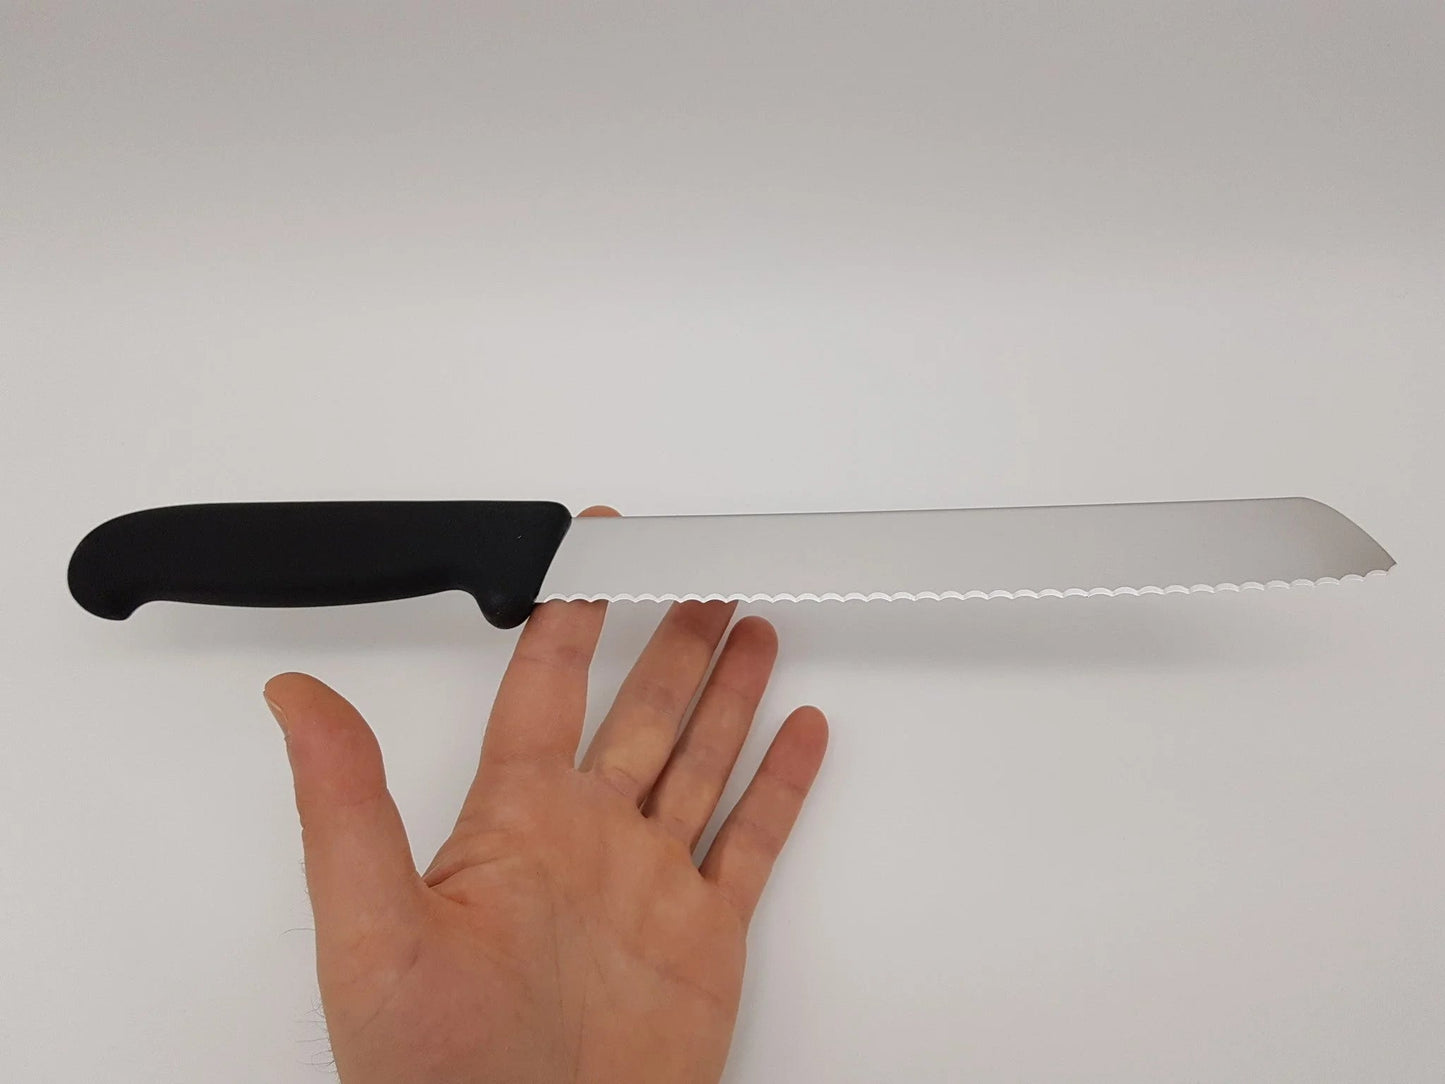 Couteau à pain 8’ - Fibrox Victorinox